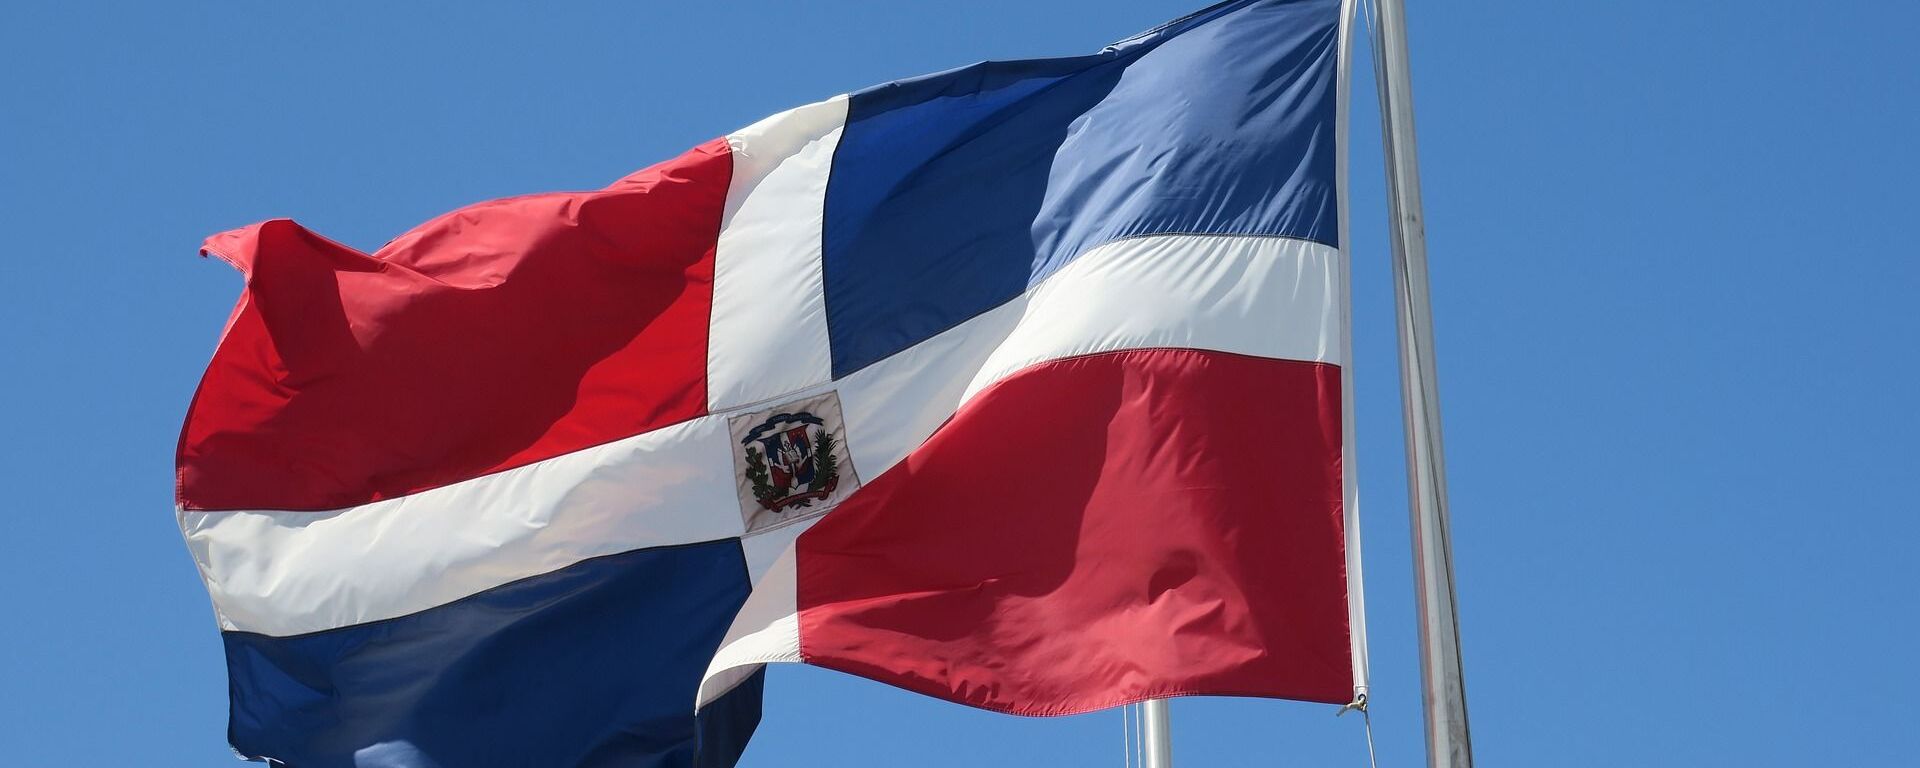 La bandera de la República Dominicana - Sputnik Mundo, 1920, 29.06.2022